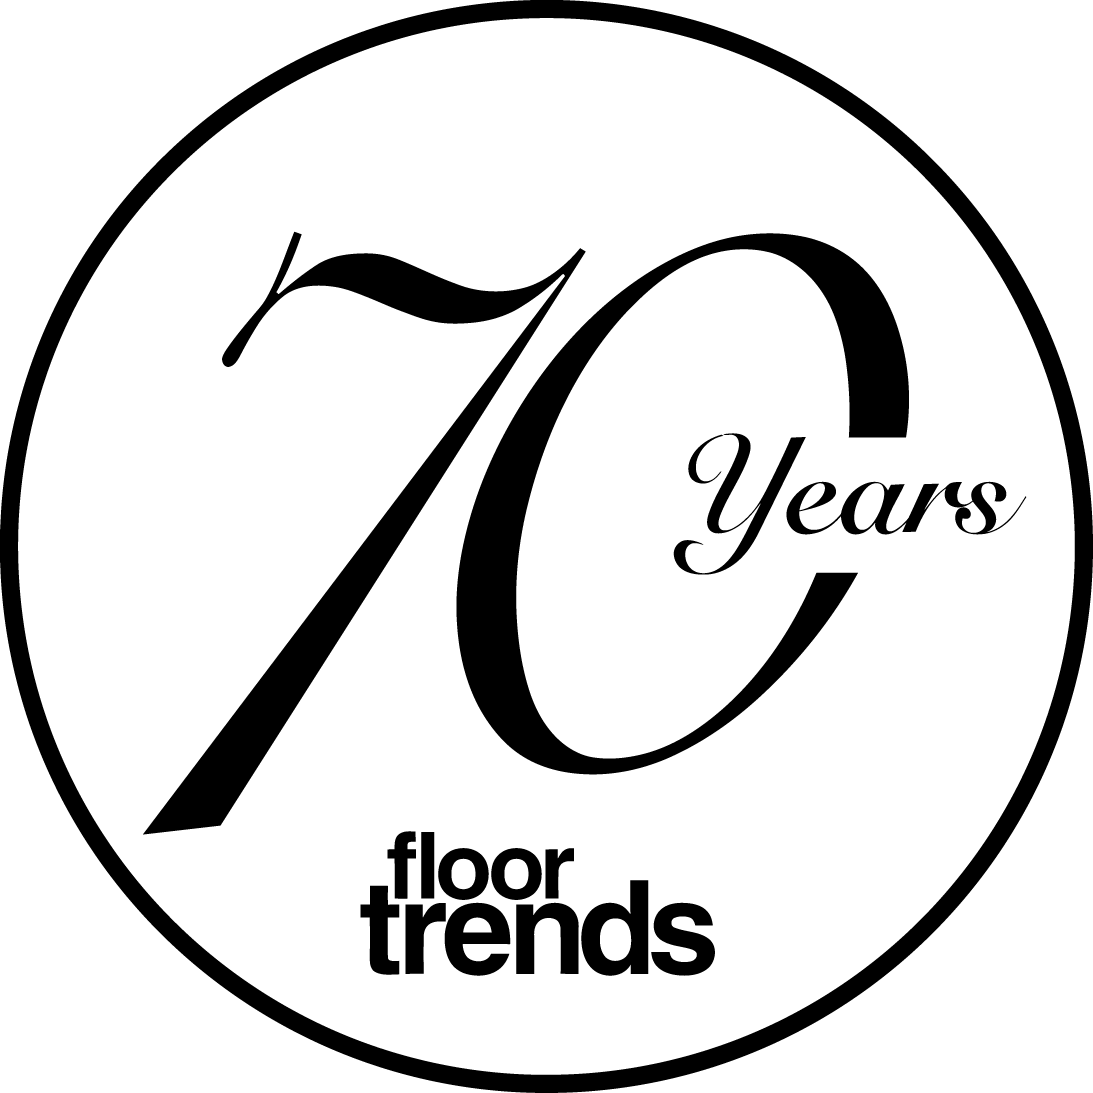 FT 70th anniversary logo black